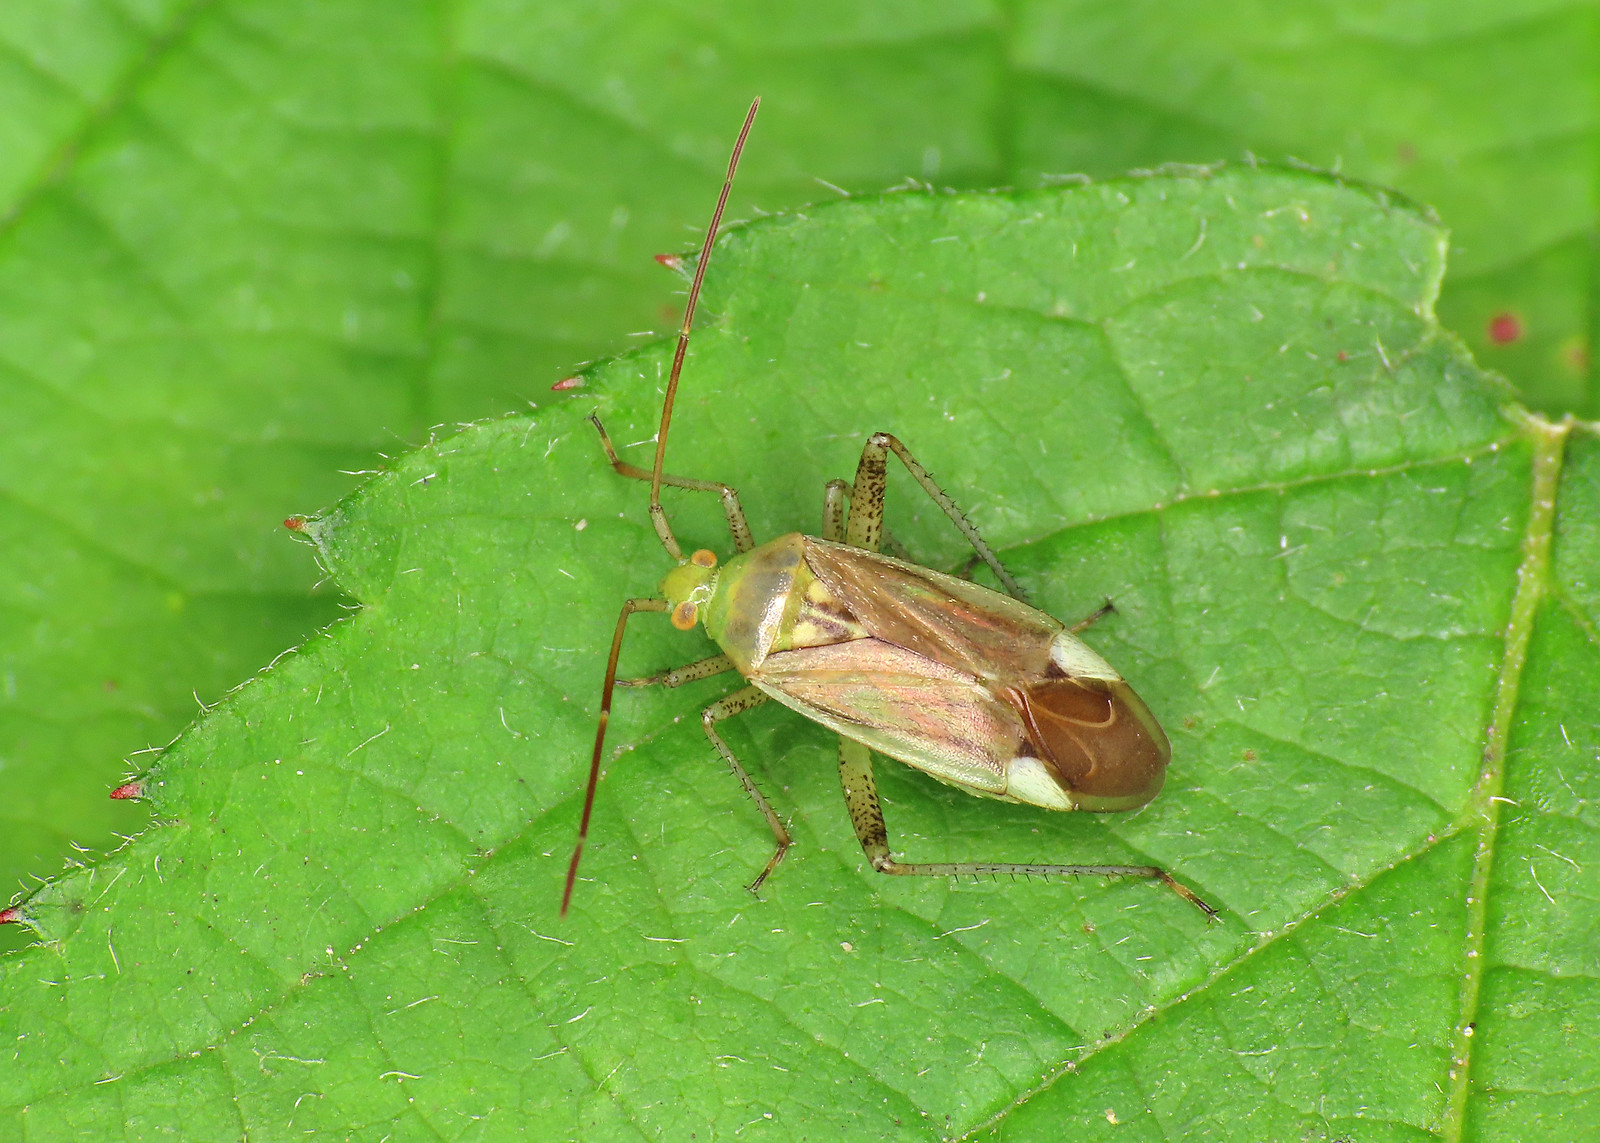 Lucerne Bug - Adelphocoris lineolatus